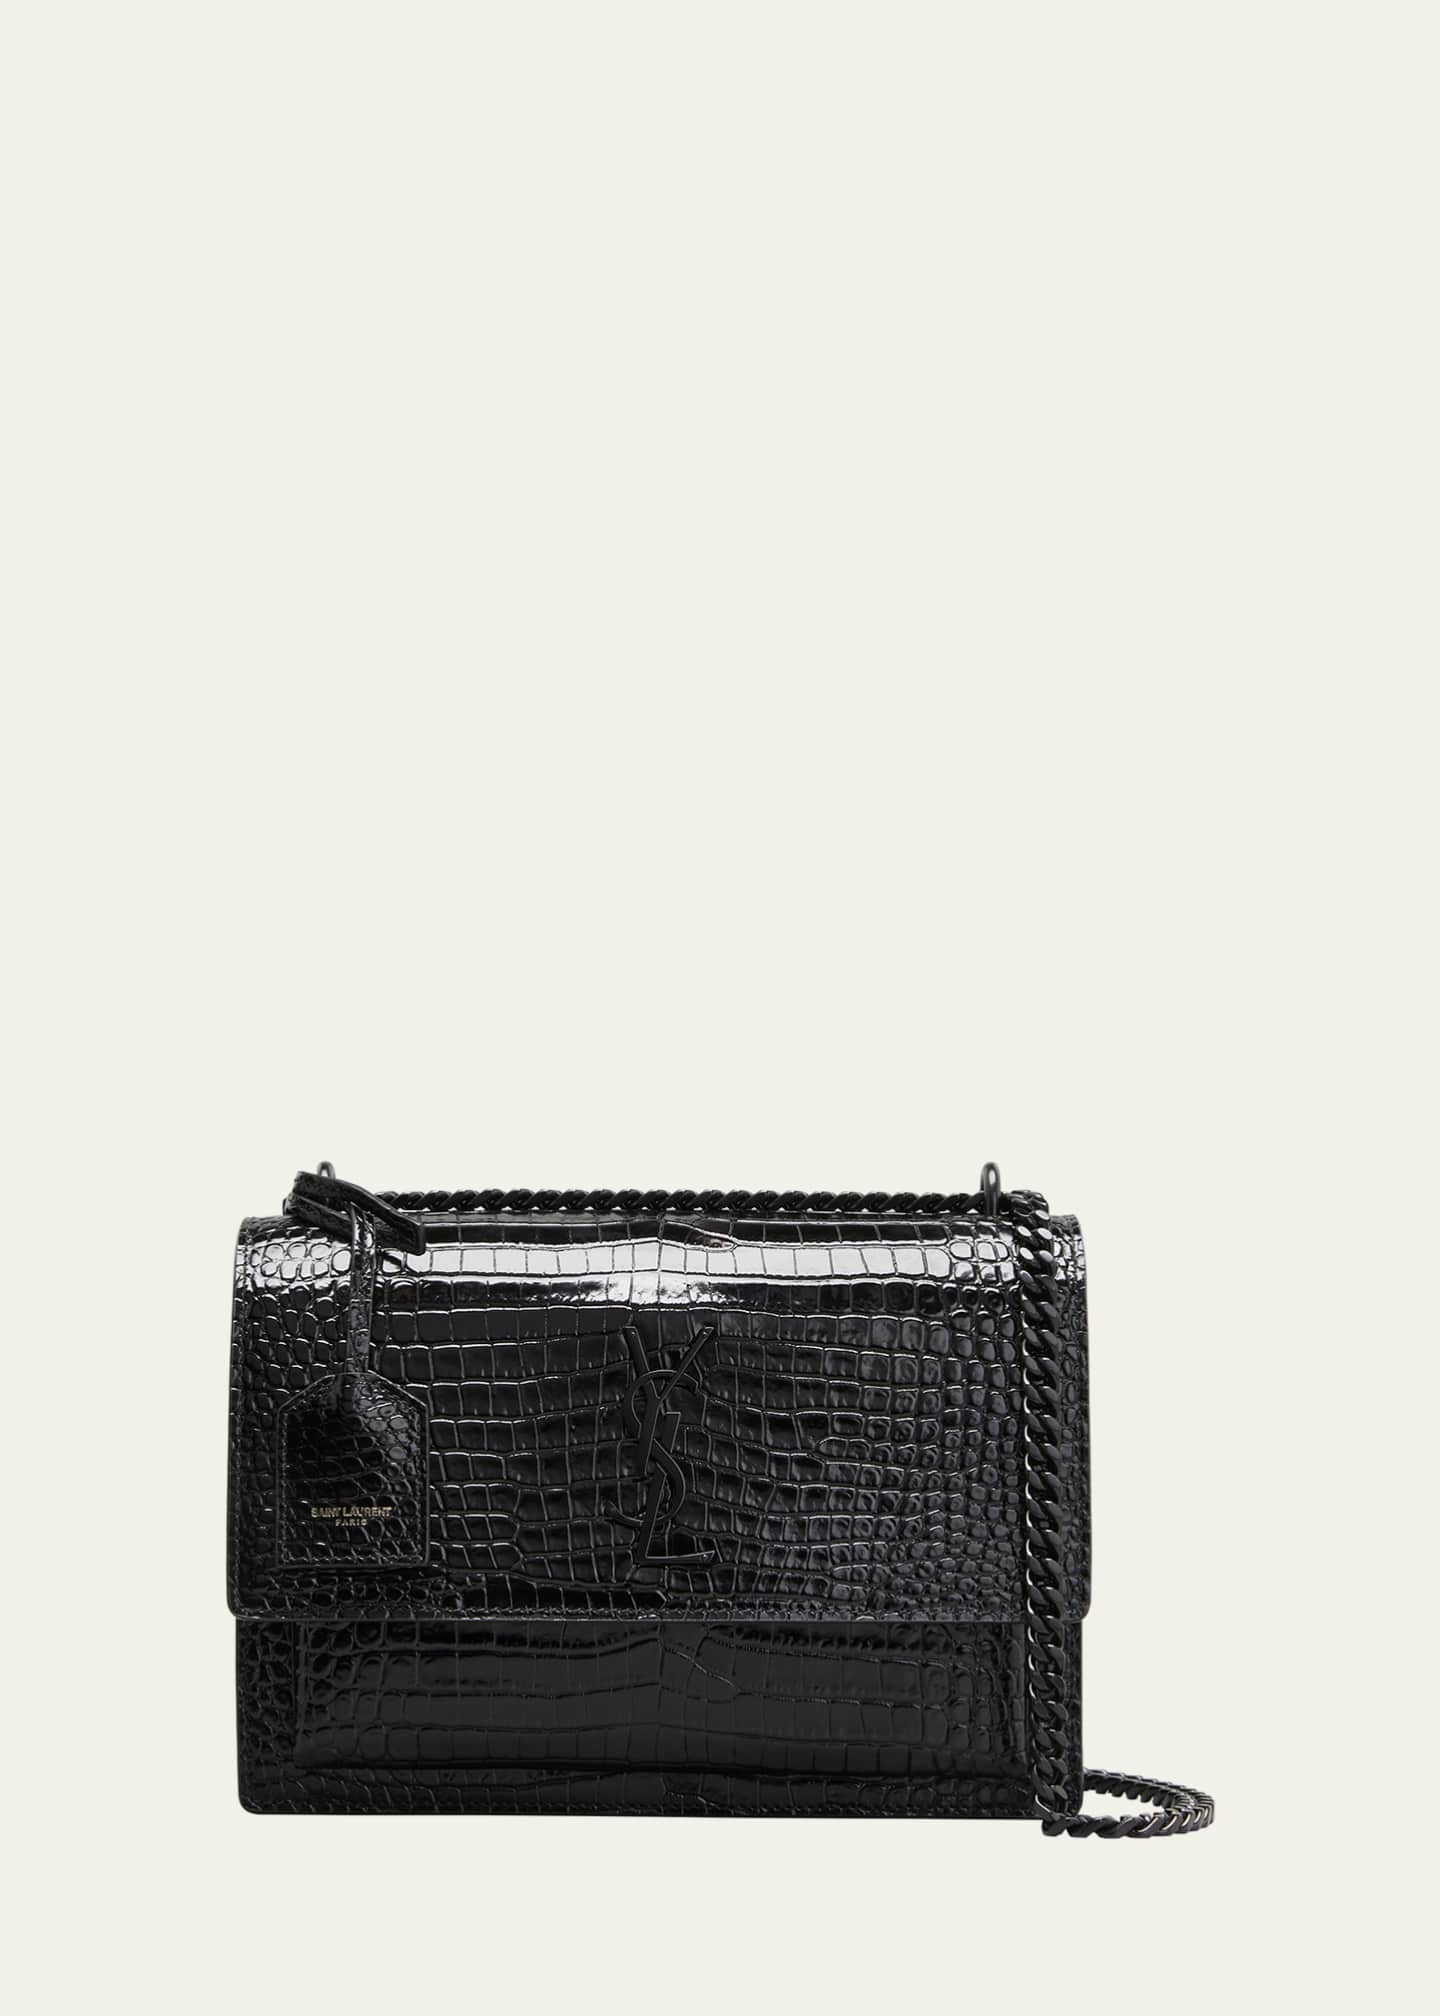 Saint Laurent Sunset Leather Medium Shoulder Bag